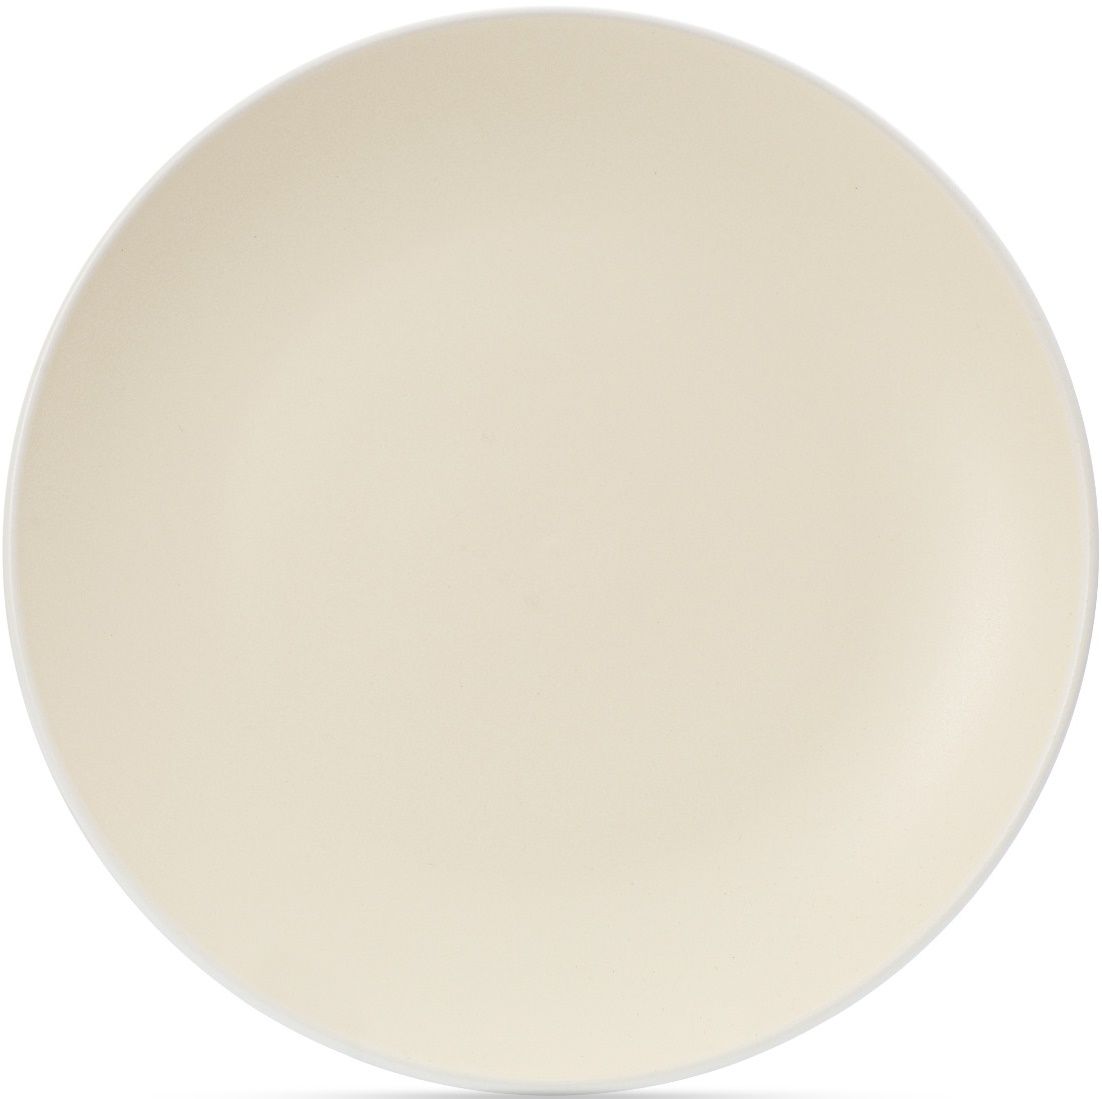 Тарелка обеденная SCANDY MILK 24см FIORETTA TDP535 тарелка обеденная scandy olive 24см fioretta tdp530